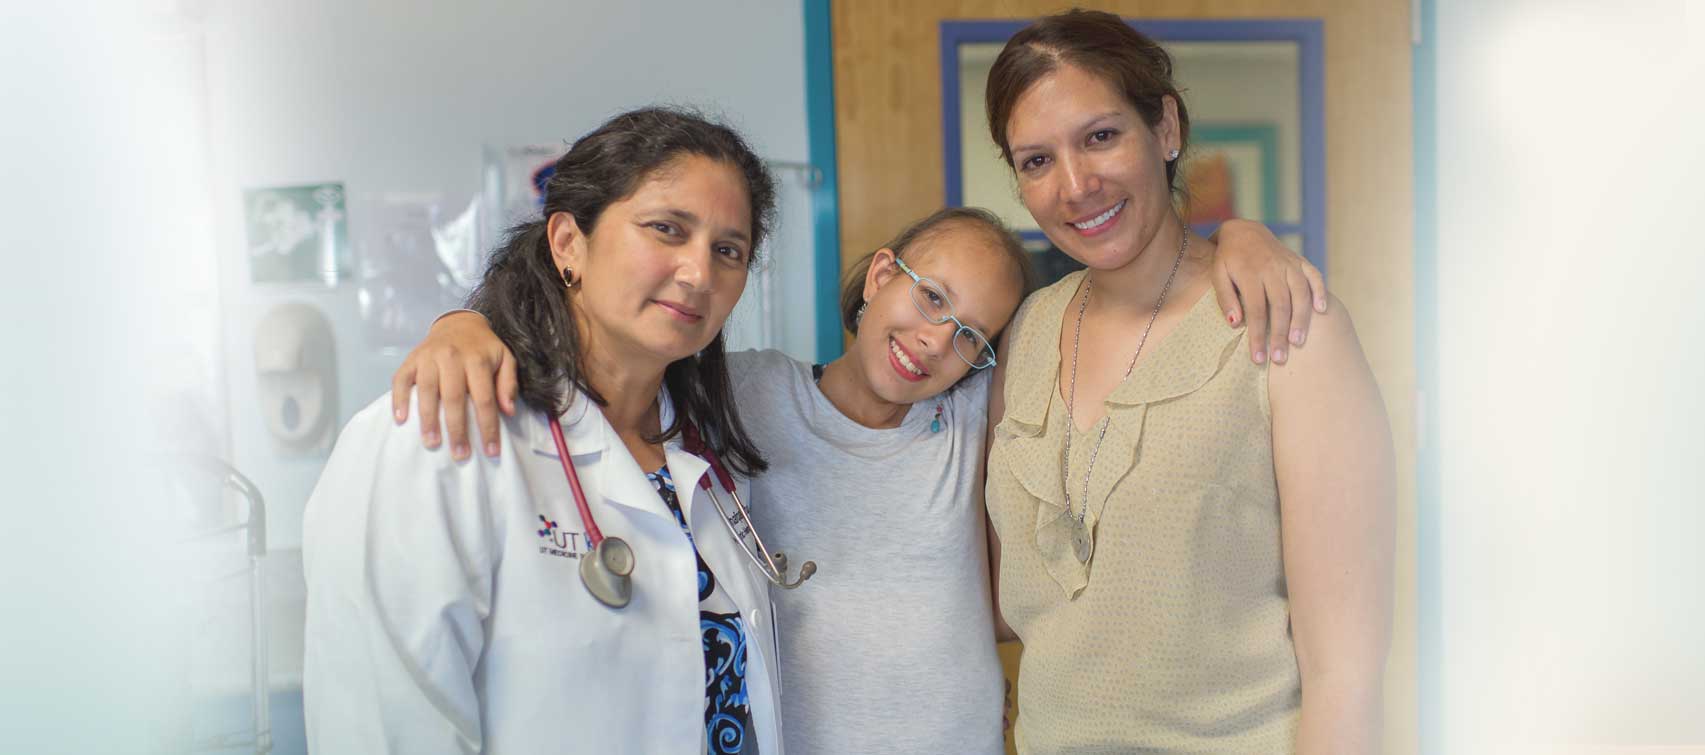 Pediatric hematologist-oncologist Shafqat Shah, M.D., Samantha Alvarez and Duke Alvarez fought together to save Samantha from an aggressive brain tumor. 